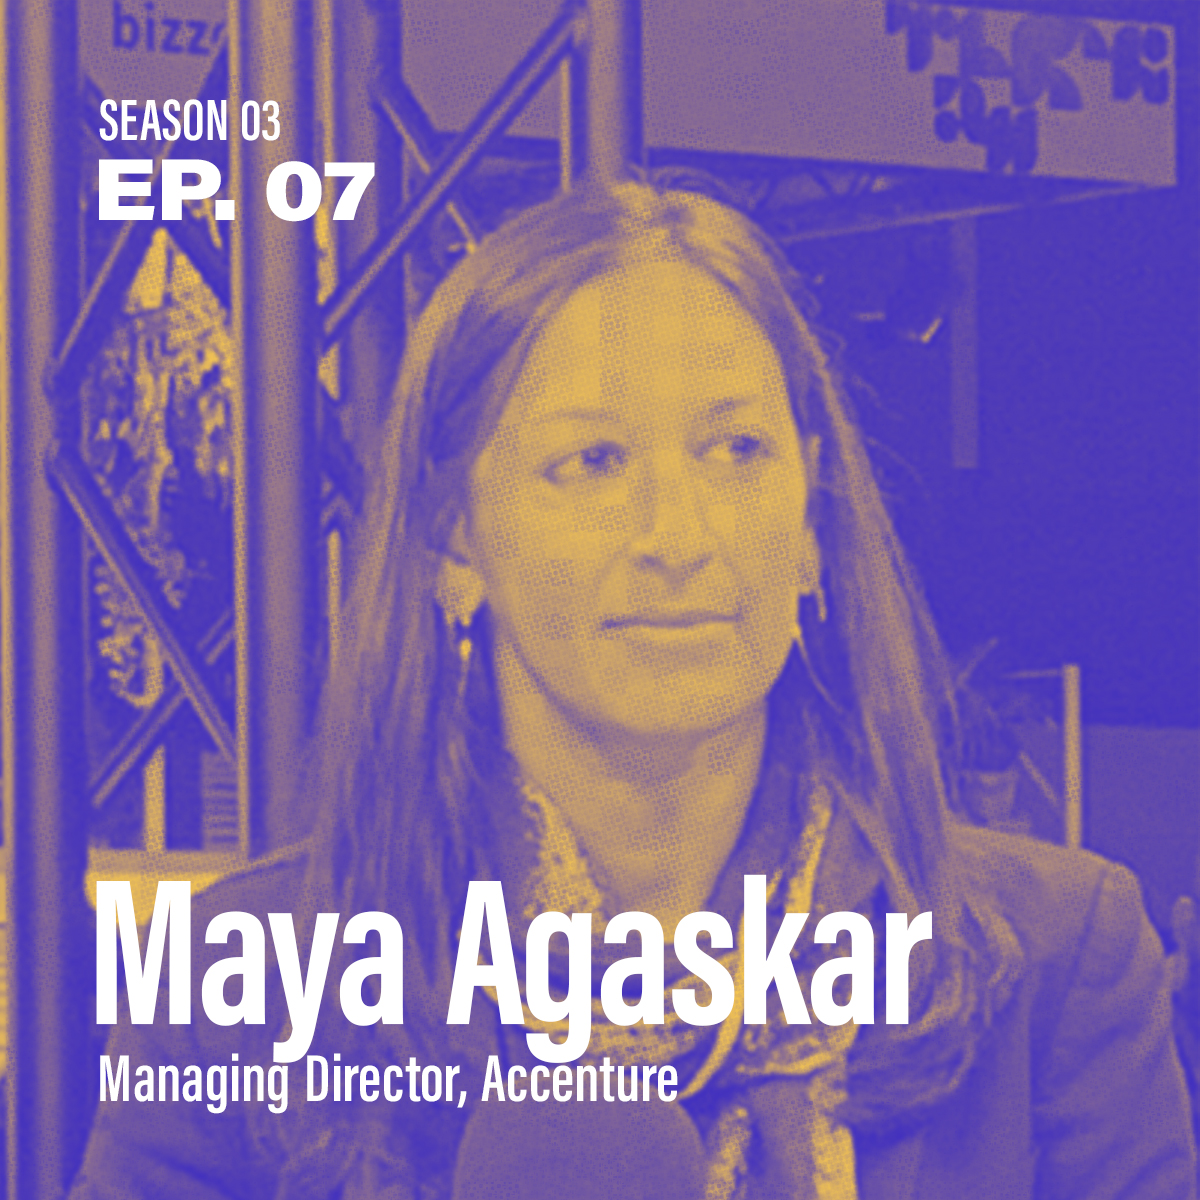 Season 3, Episode 7 - "How does platform thinking fit into digital transformation?" with Maya Agaskar, Managing Director, Accenture